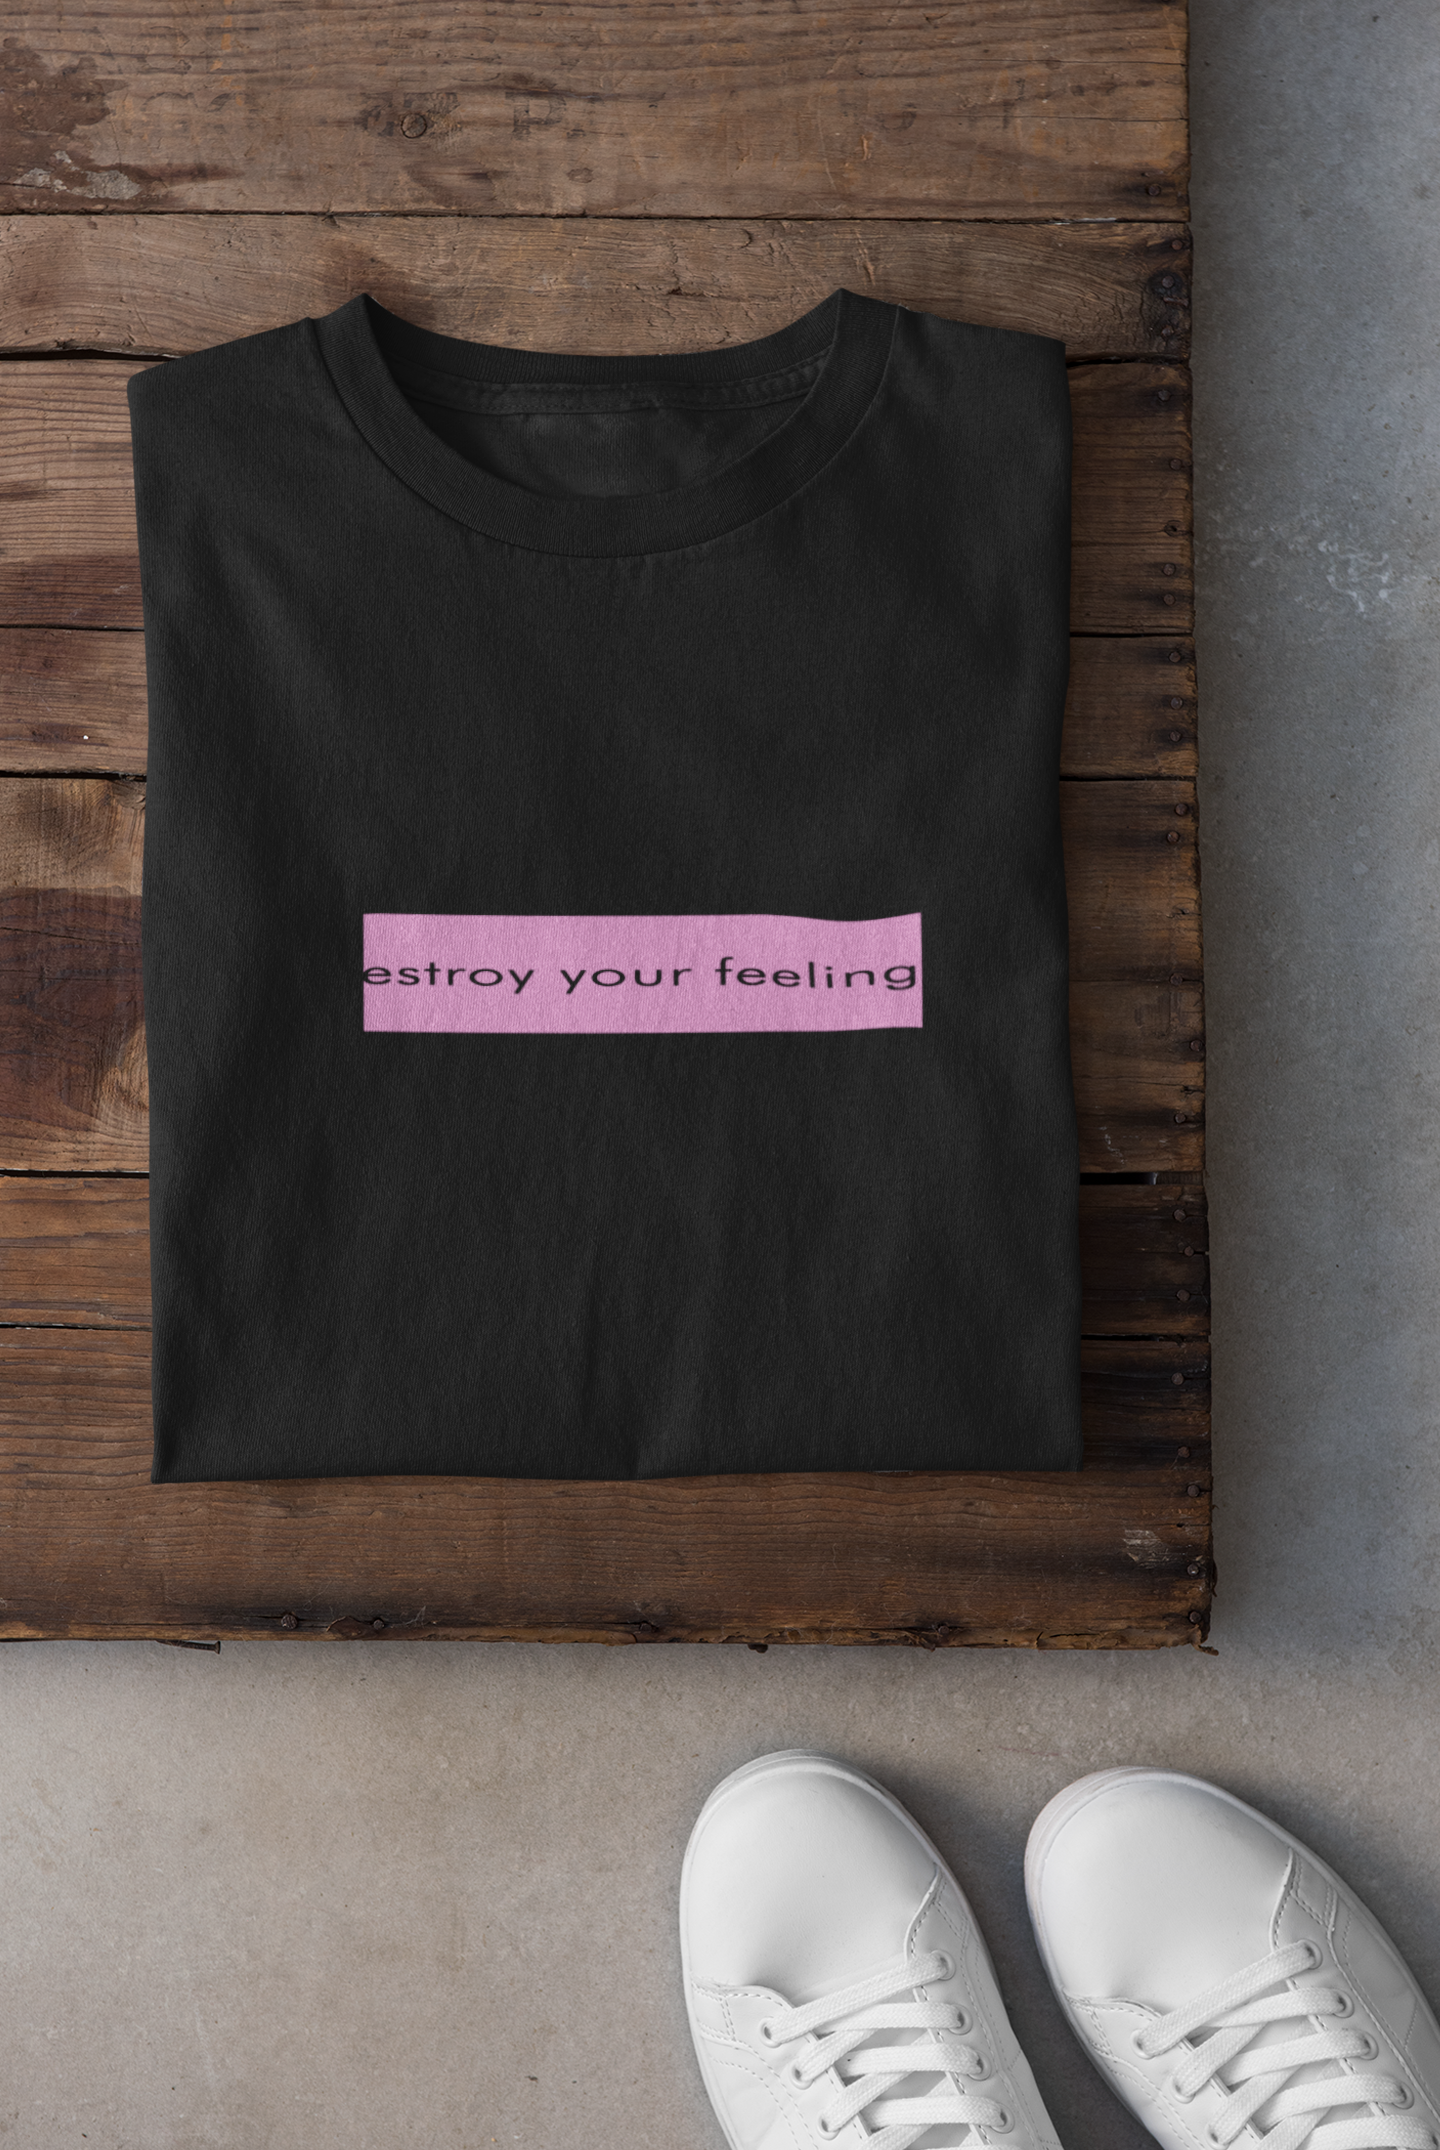 Destroy Your Feelings Minimal Women Half Sleeves T-shirt- FunkyTeesClub